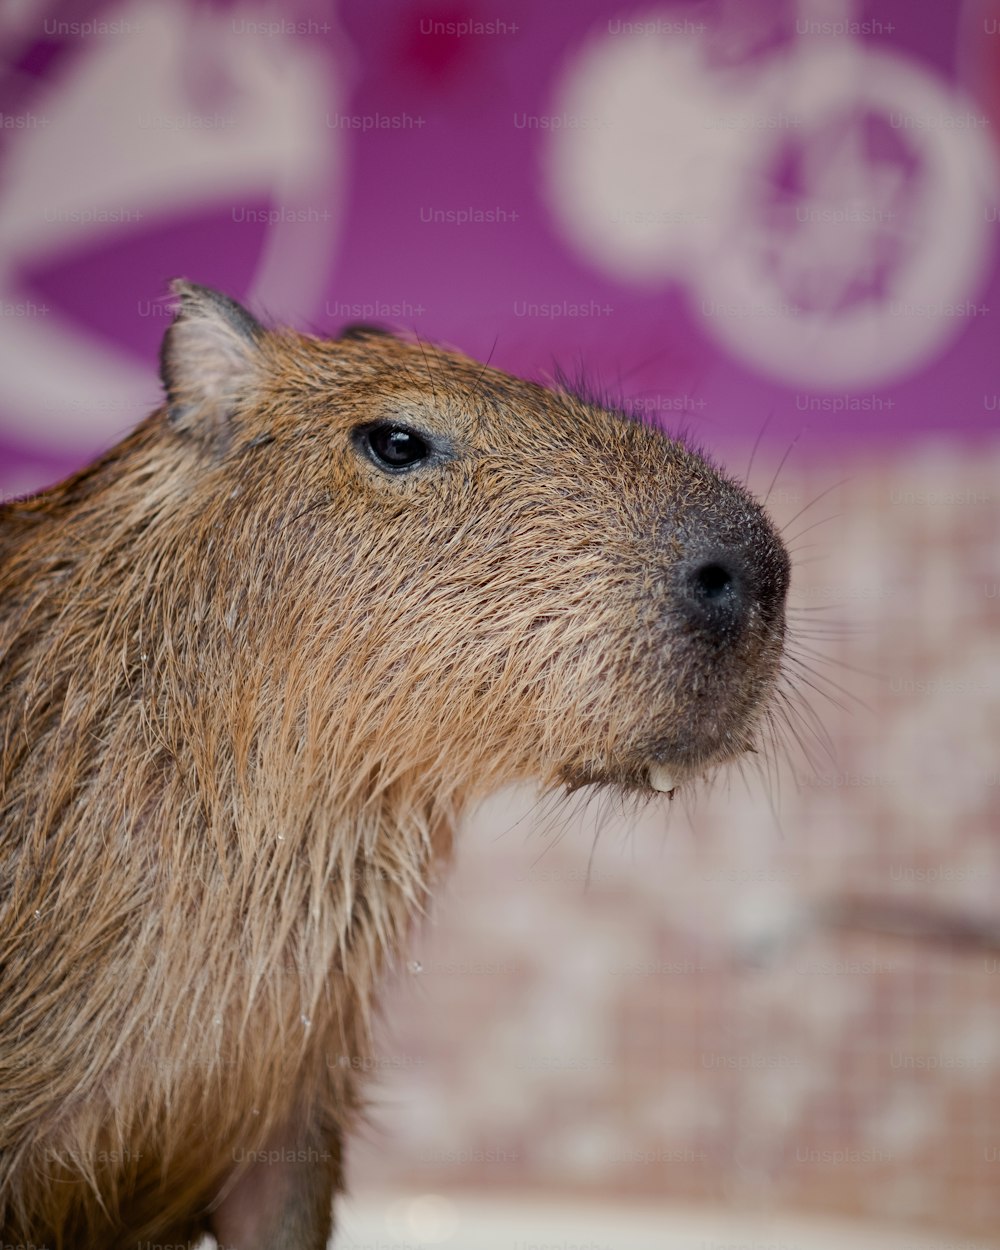 a close up of a capybara in a bathtub